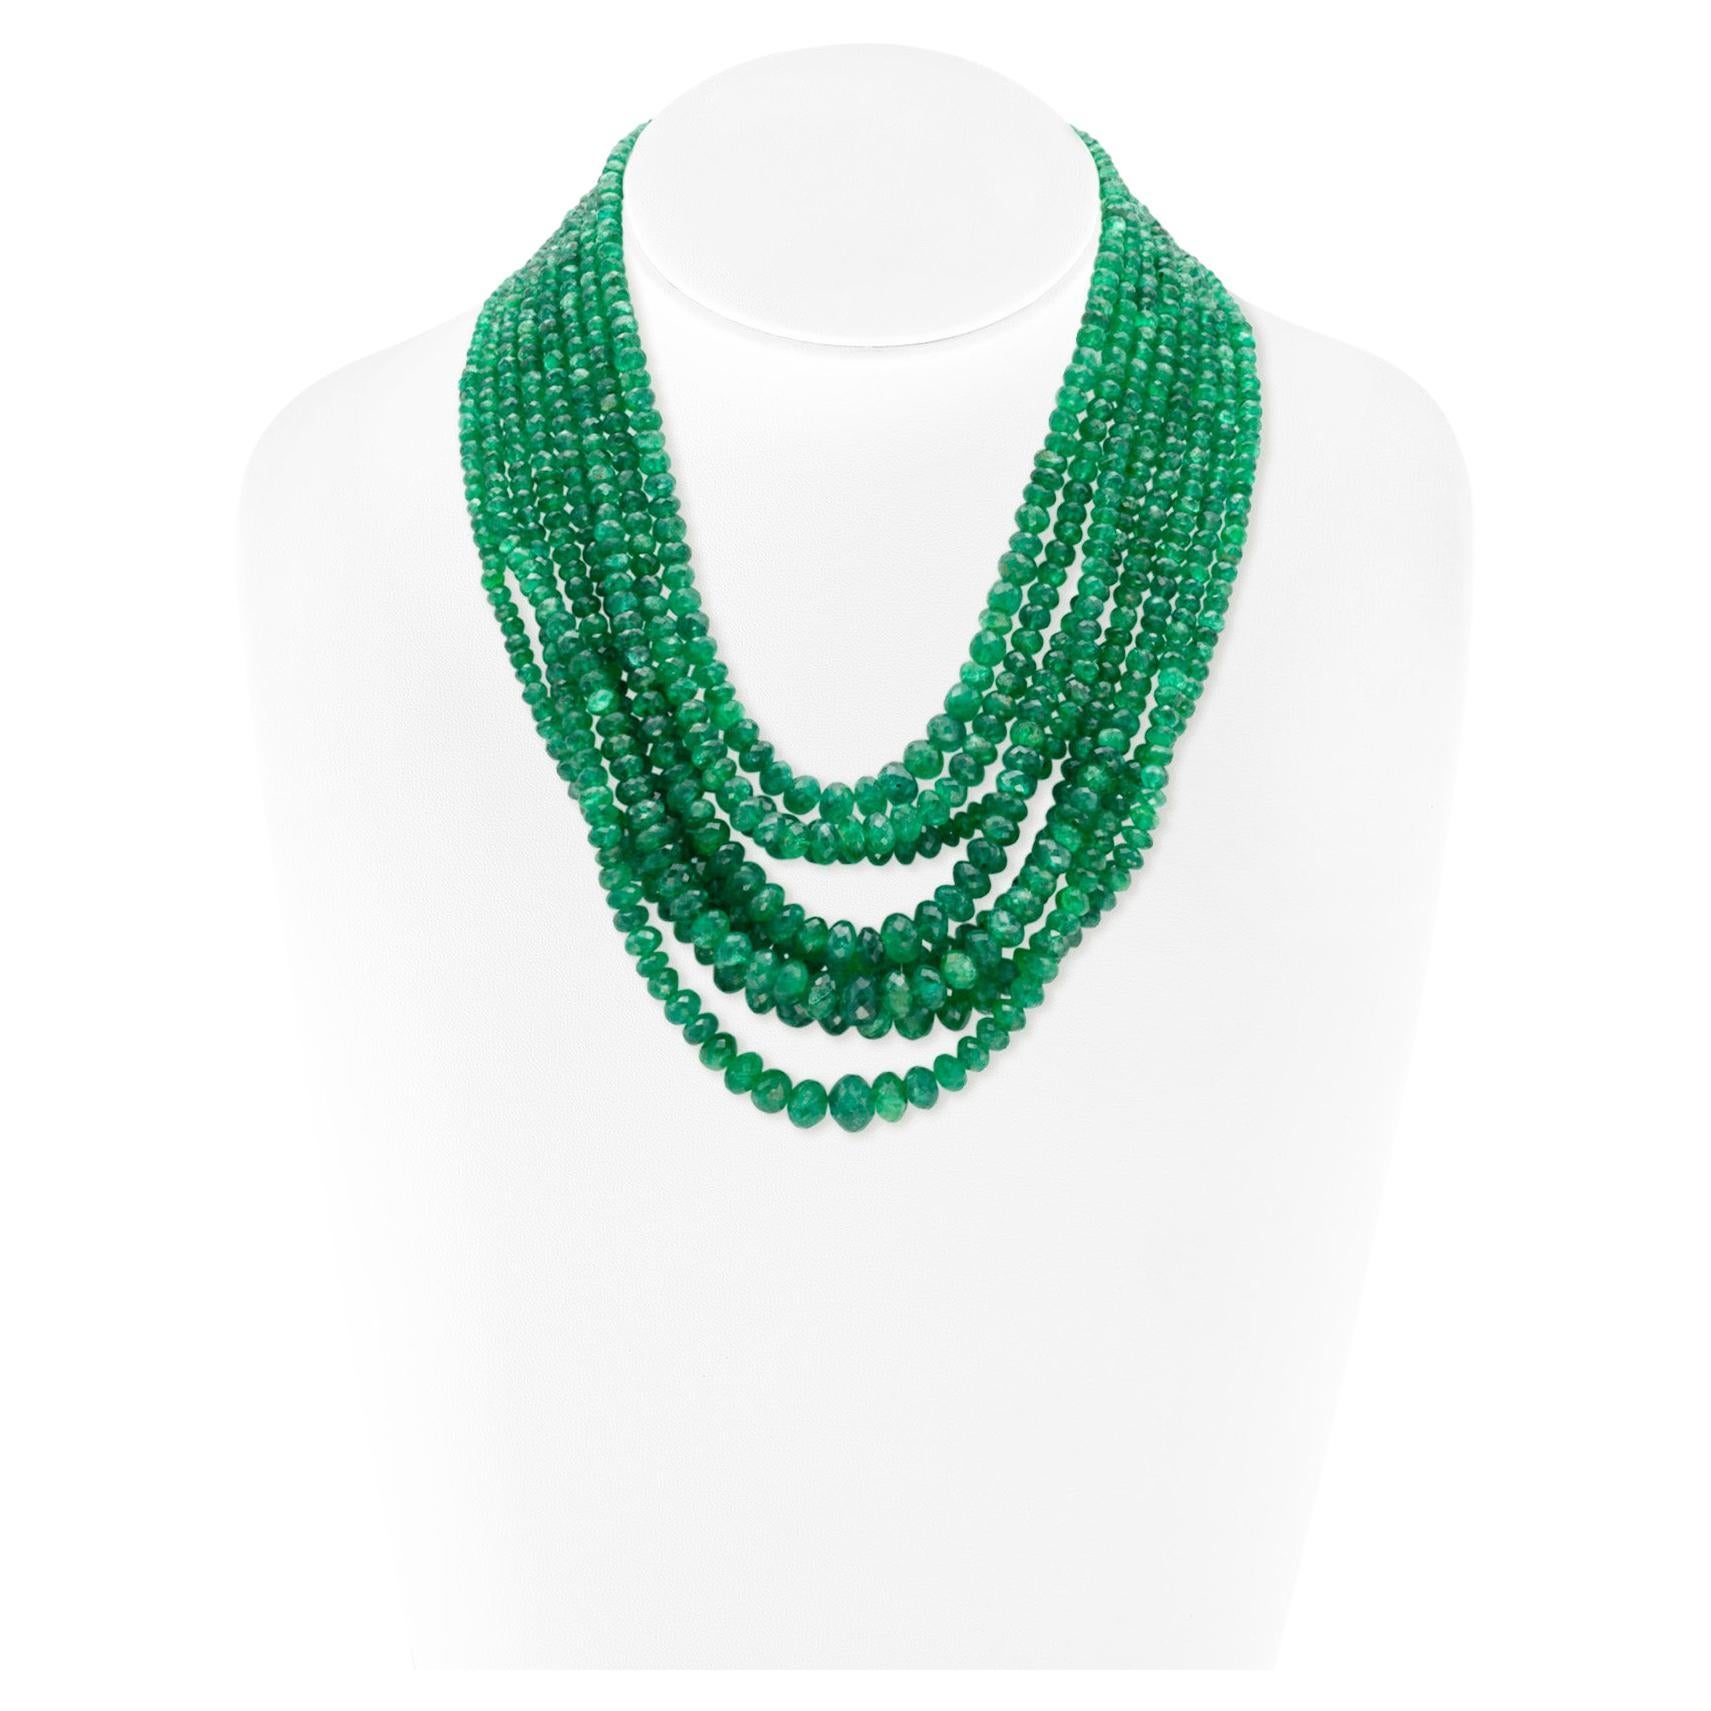 850.00 Carat Emerald Beads Necklace